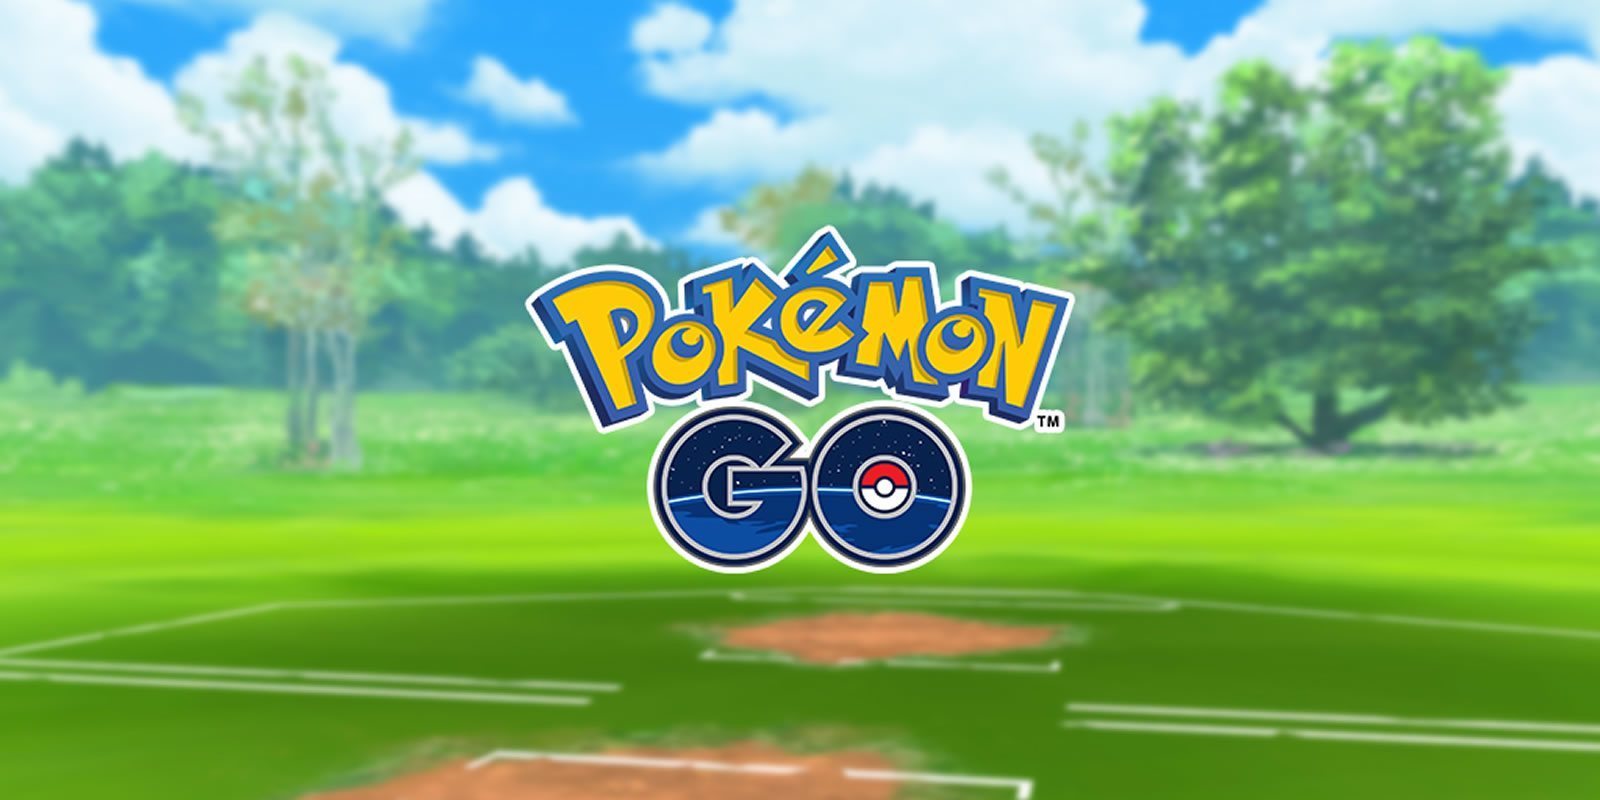 La Liga Combates GO llega a 'Pokémon GO'